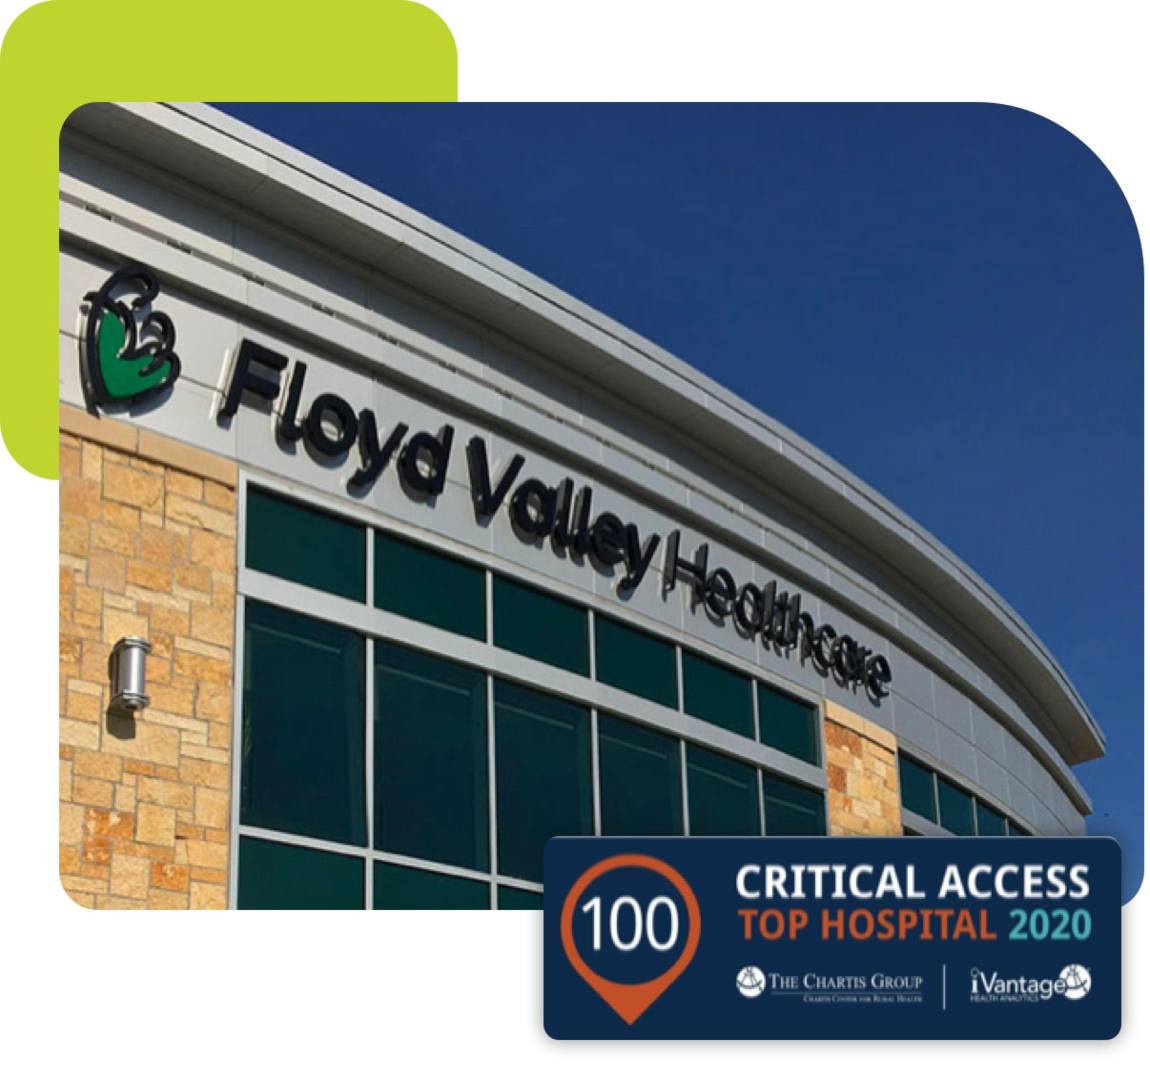 Floyd Valley Hospital in Le Mars, Iowa